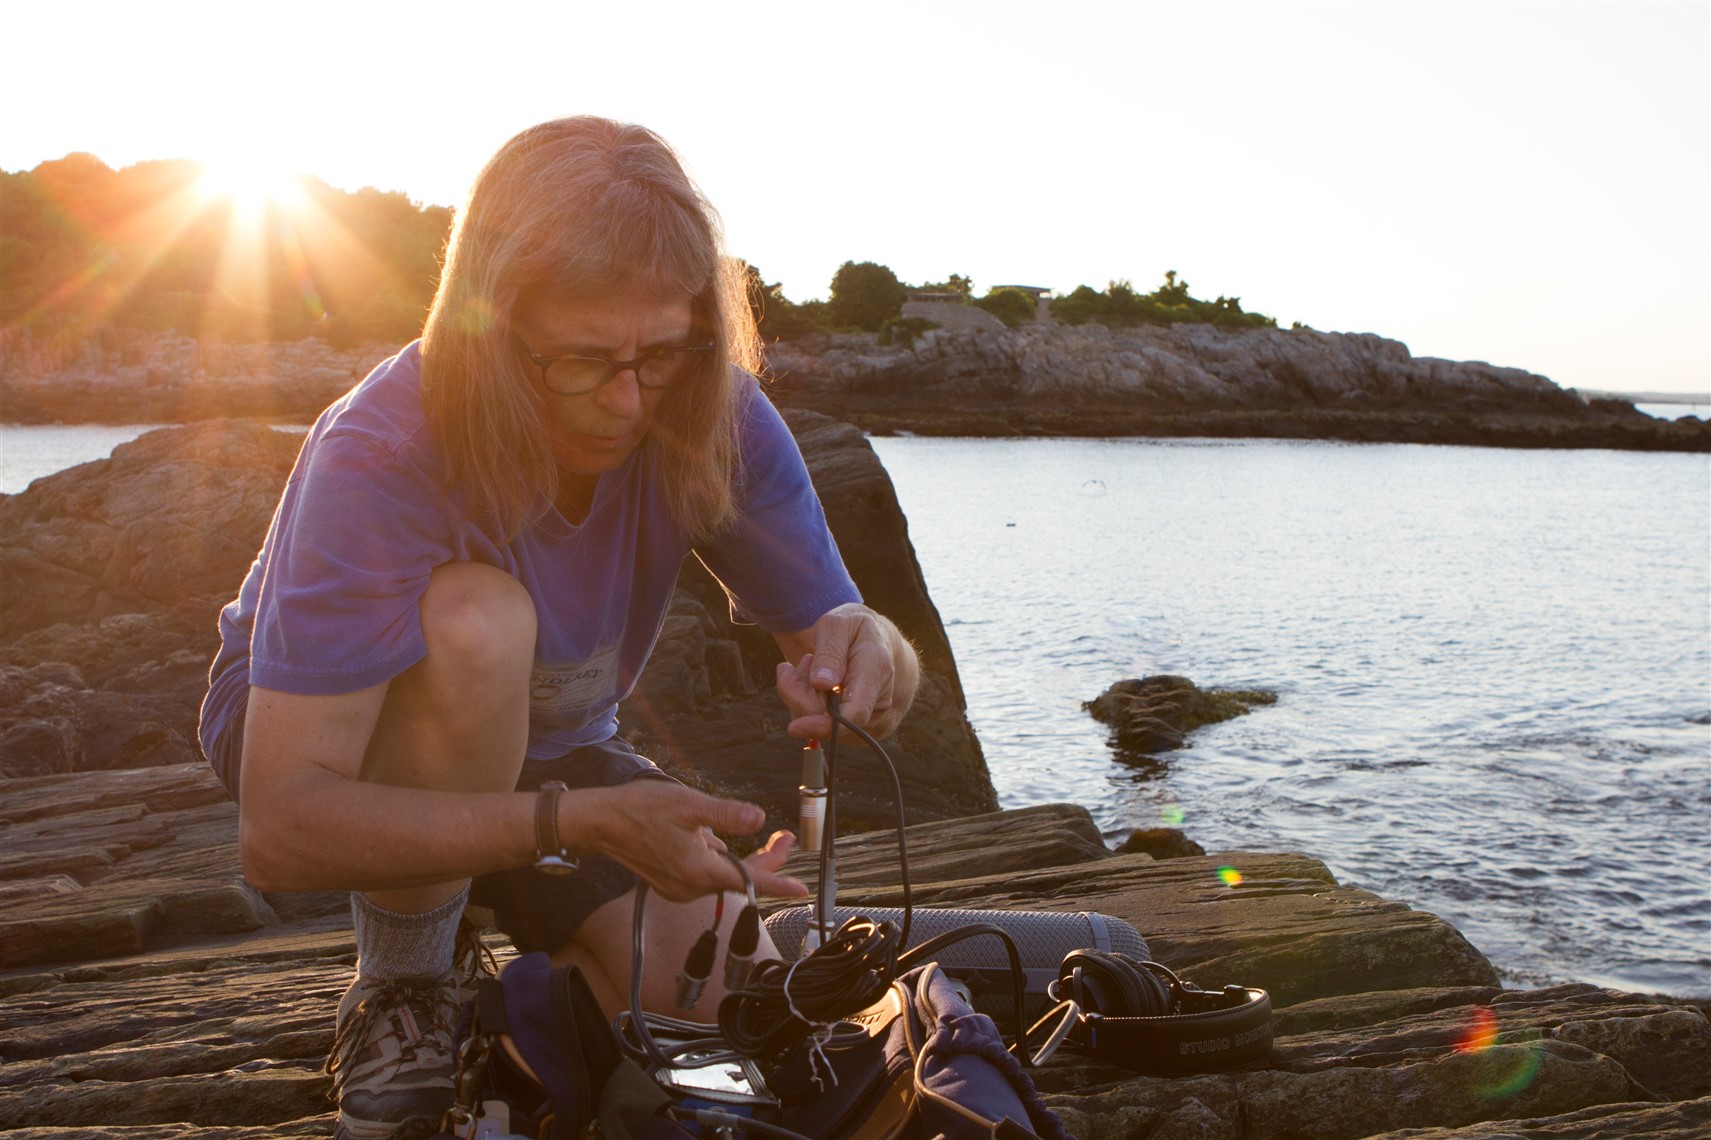 Dianne gathering audio cords on the rocks at sundown